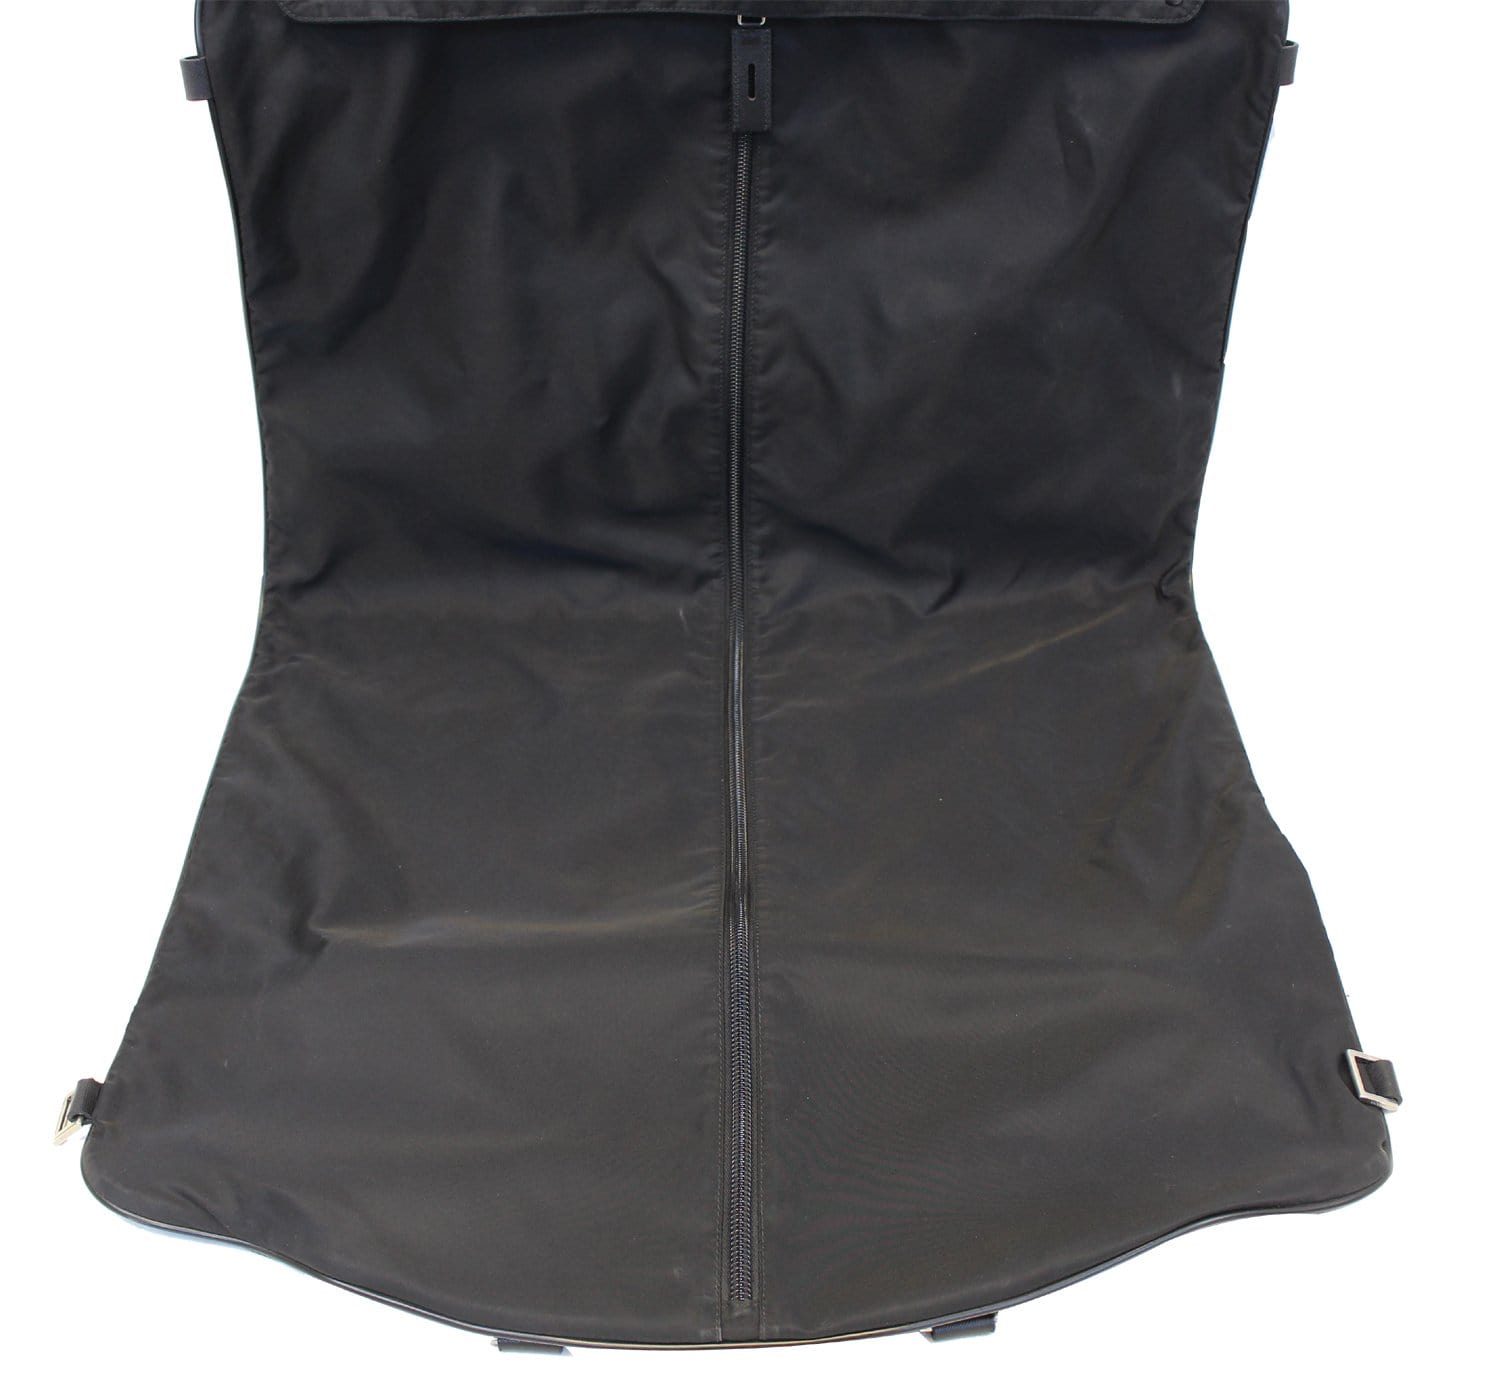 Re-nylon travel bag Prada Black in Cotton - 31282771